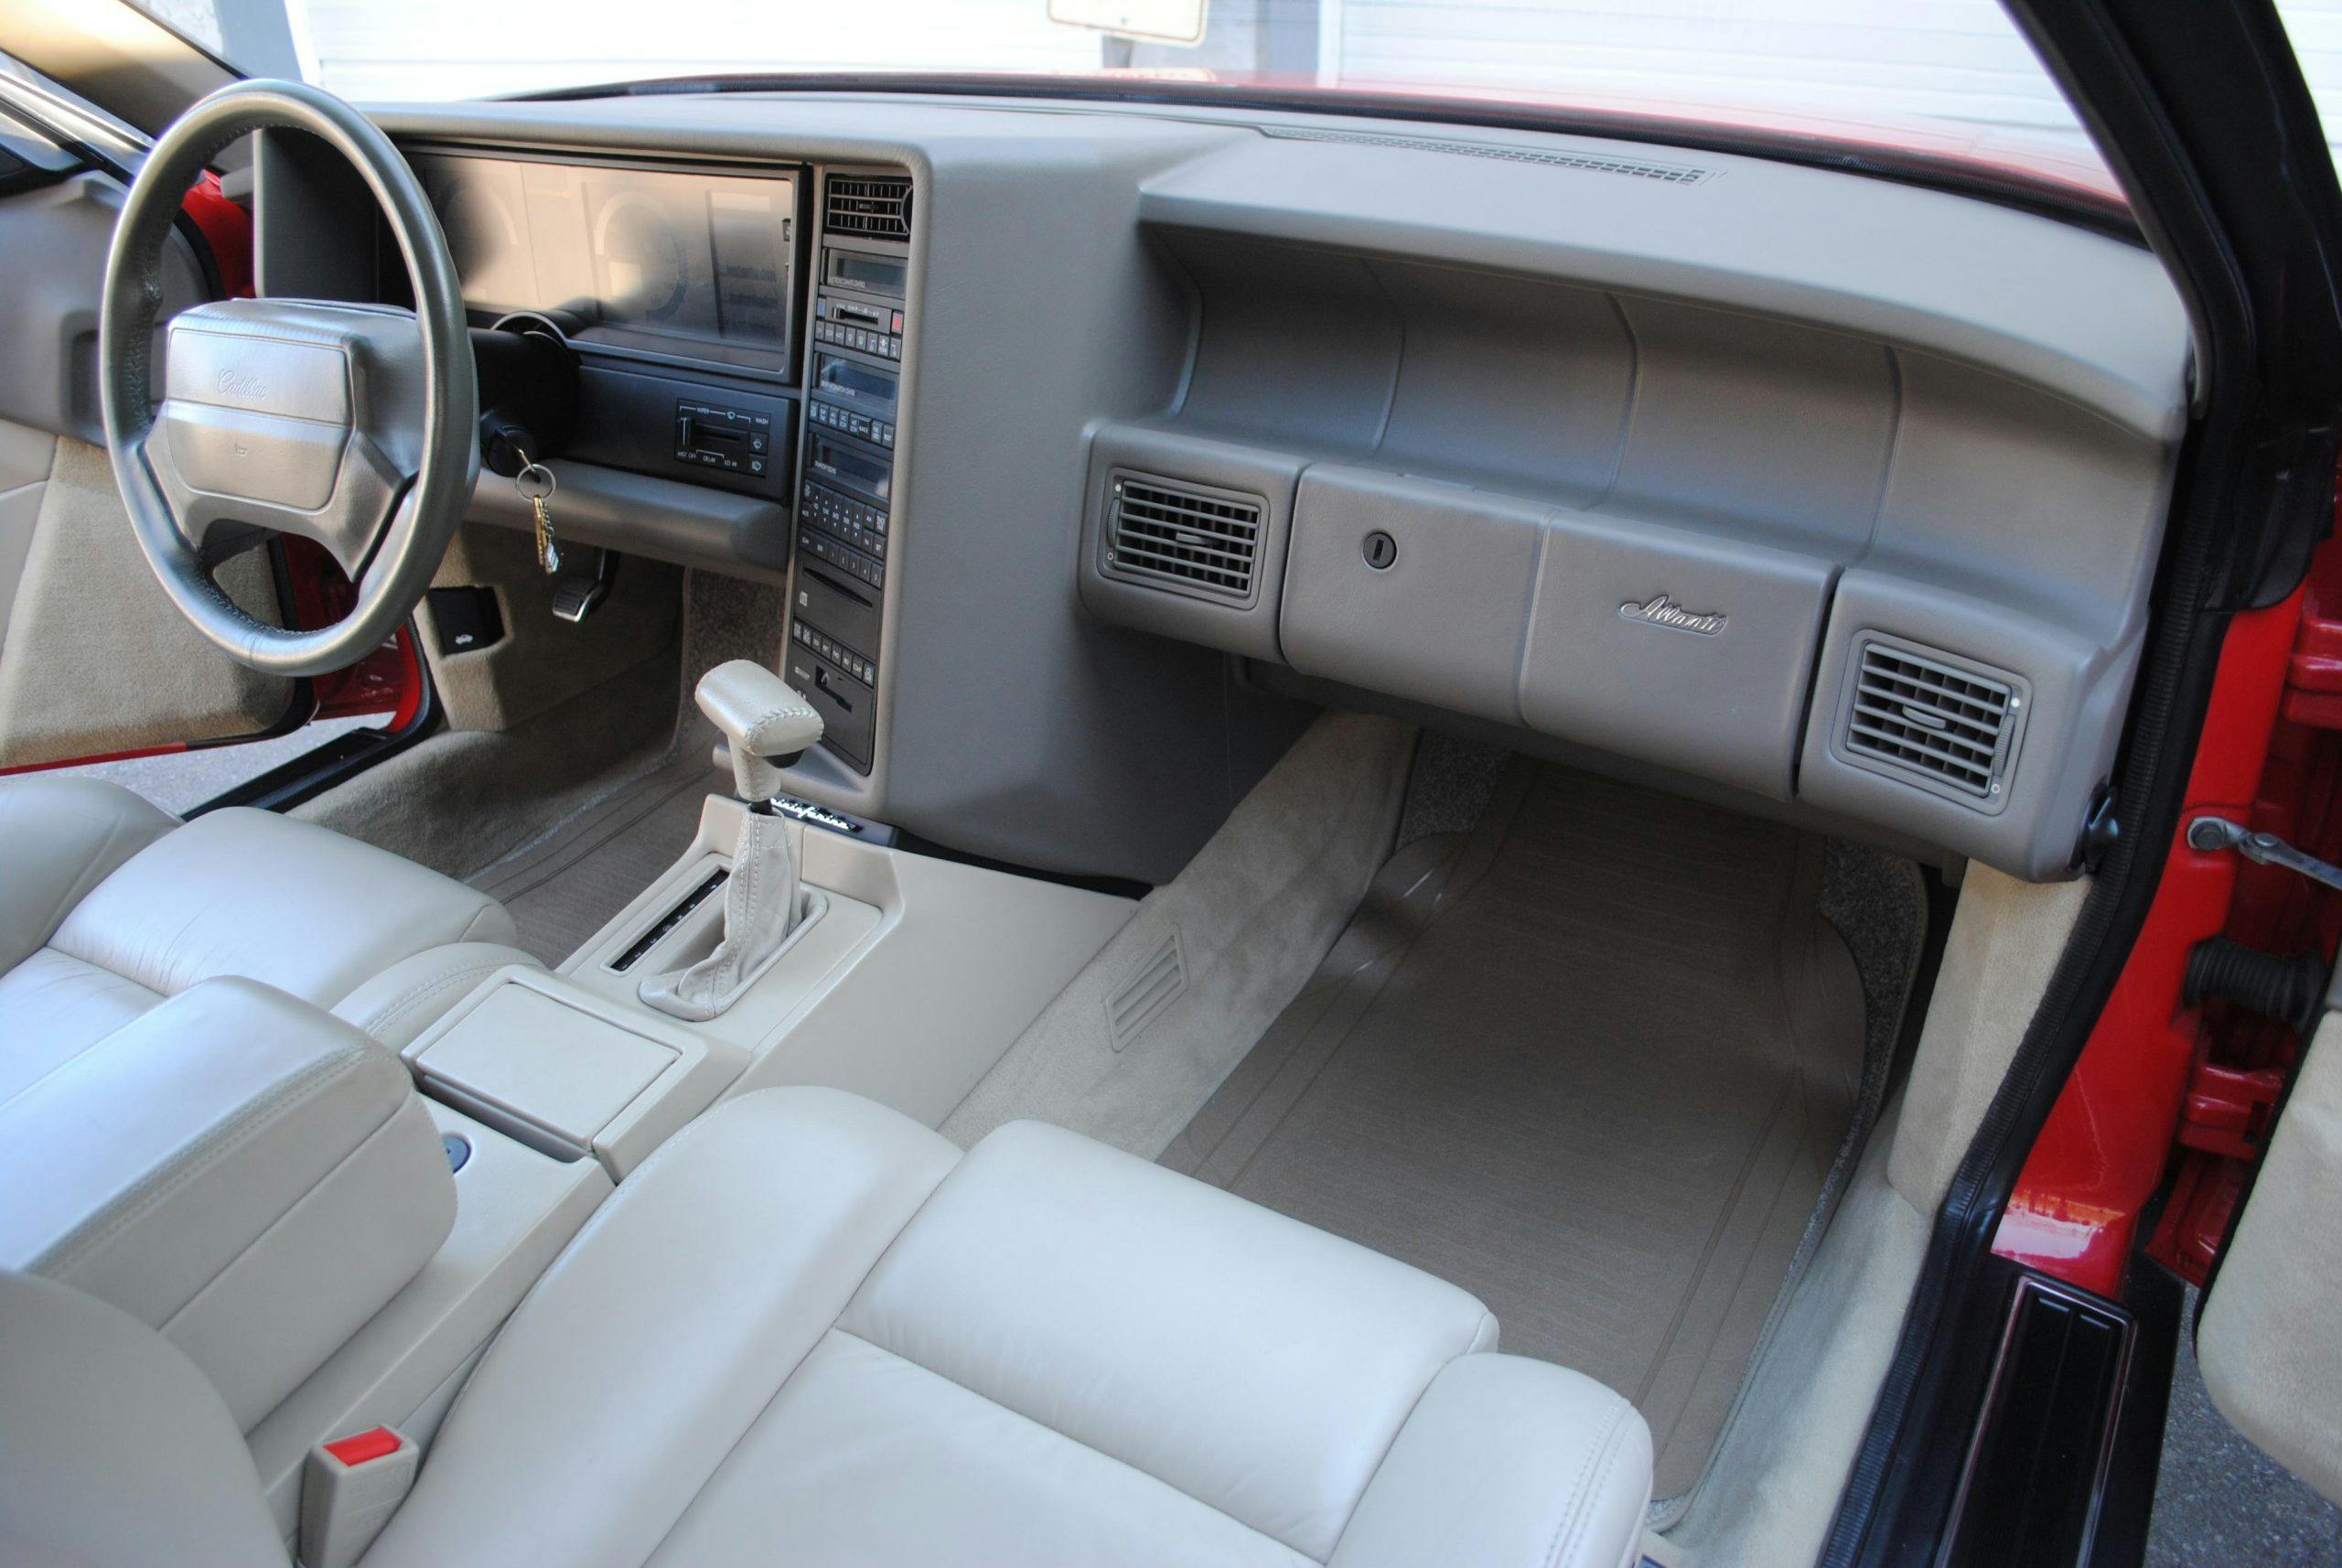 1993 Cadillac Allante interior front passenger side